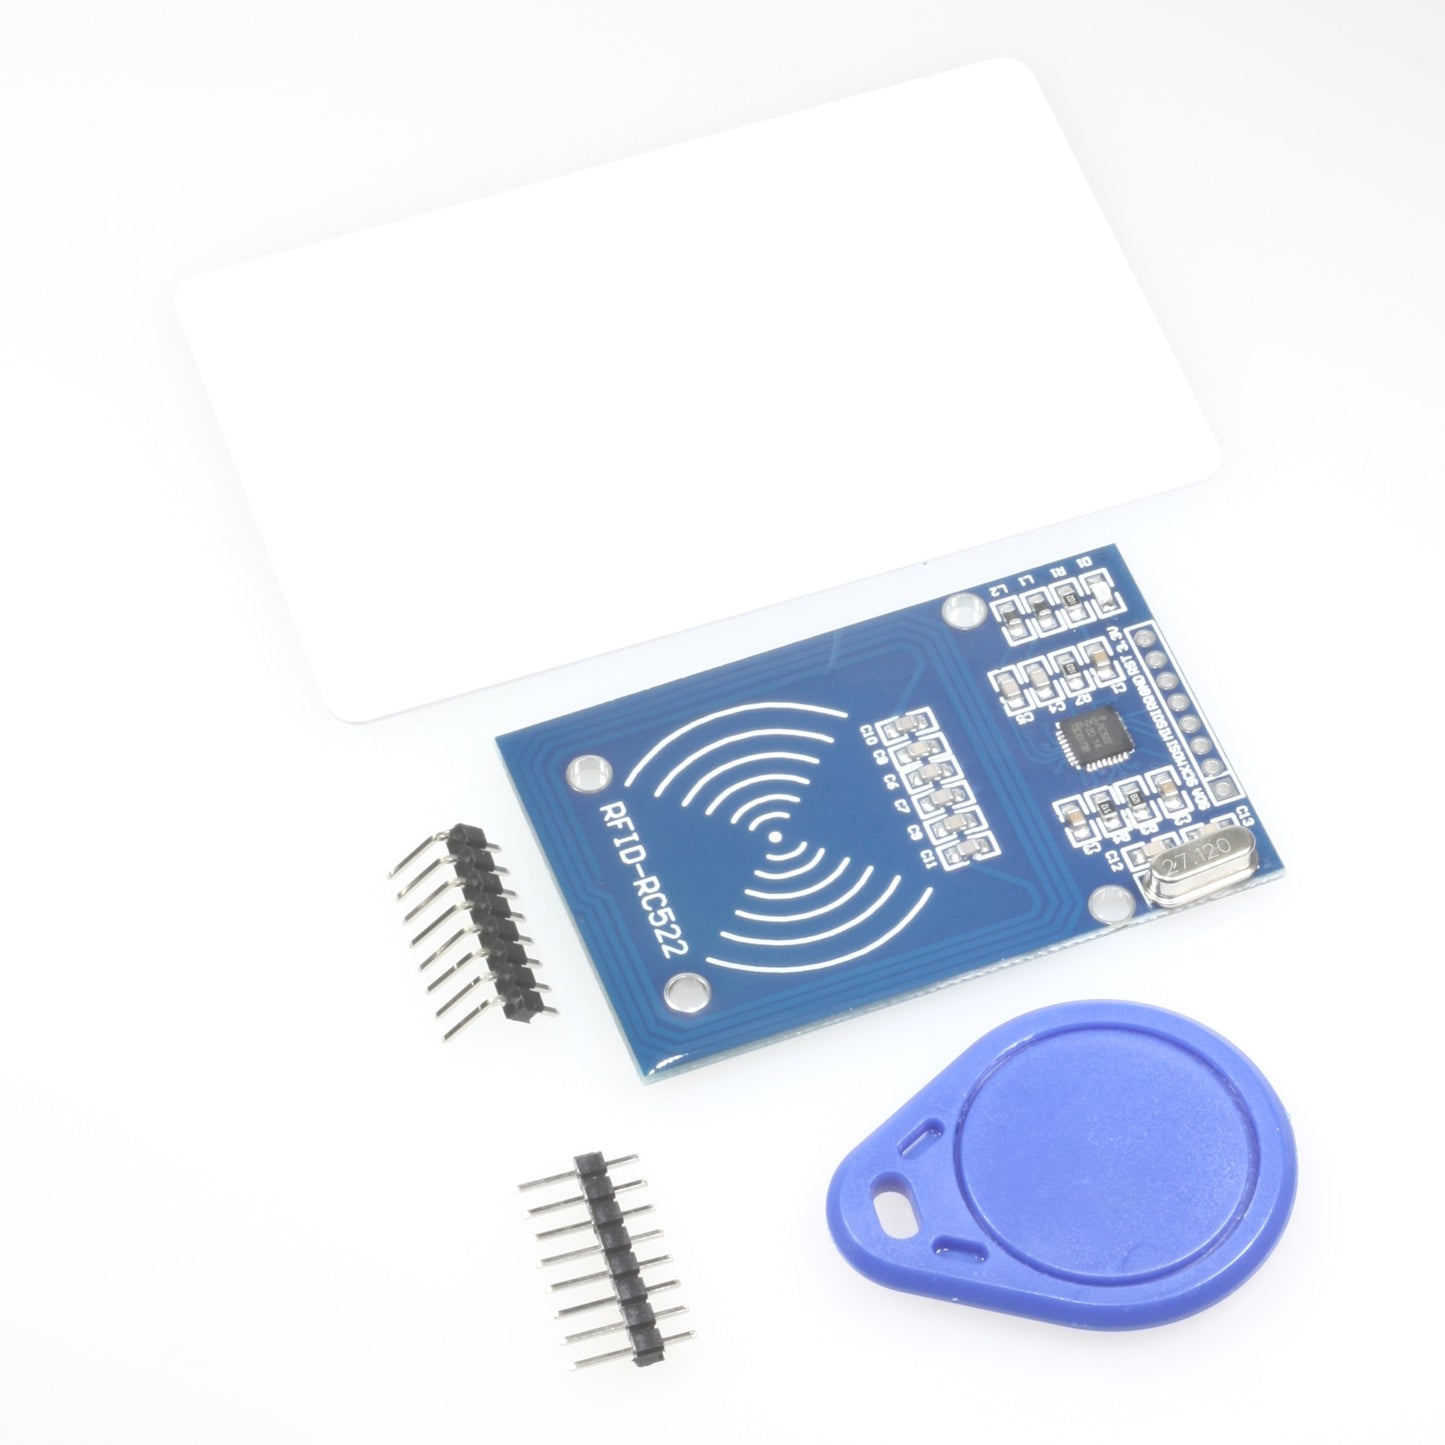 RFID-Kit RC522 mit MIFARE Transponder und Karte